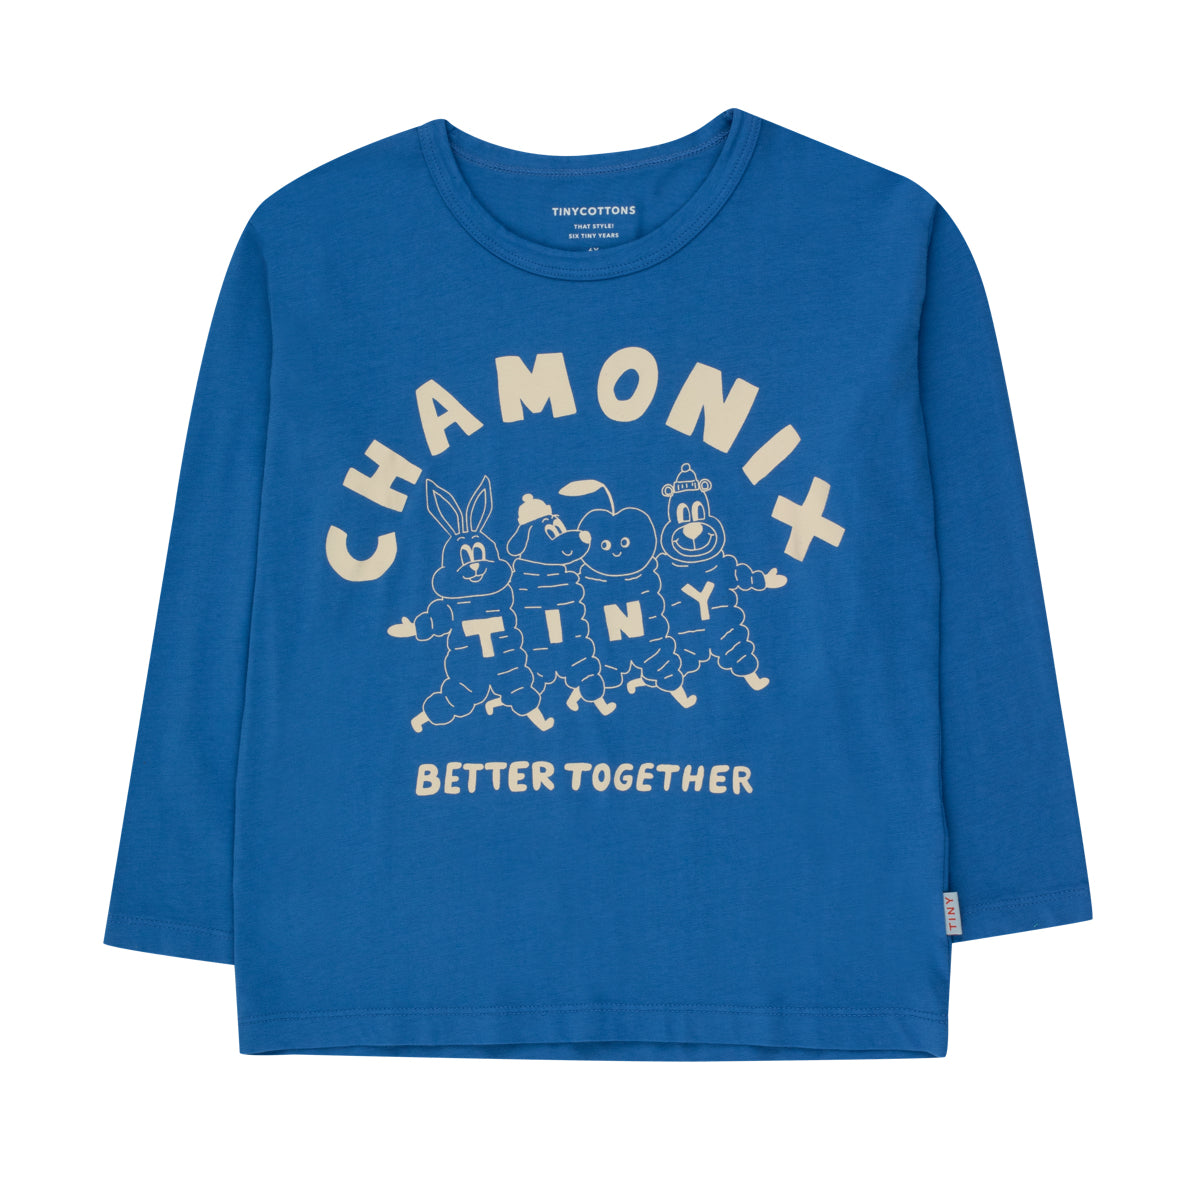 Chamonix Tee – blue